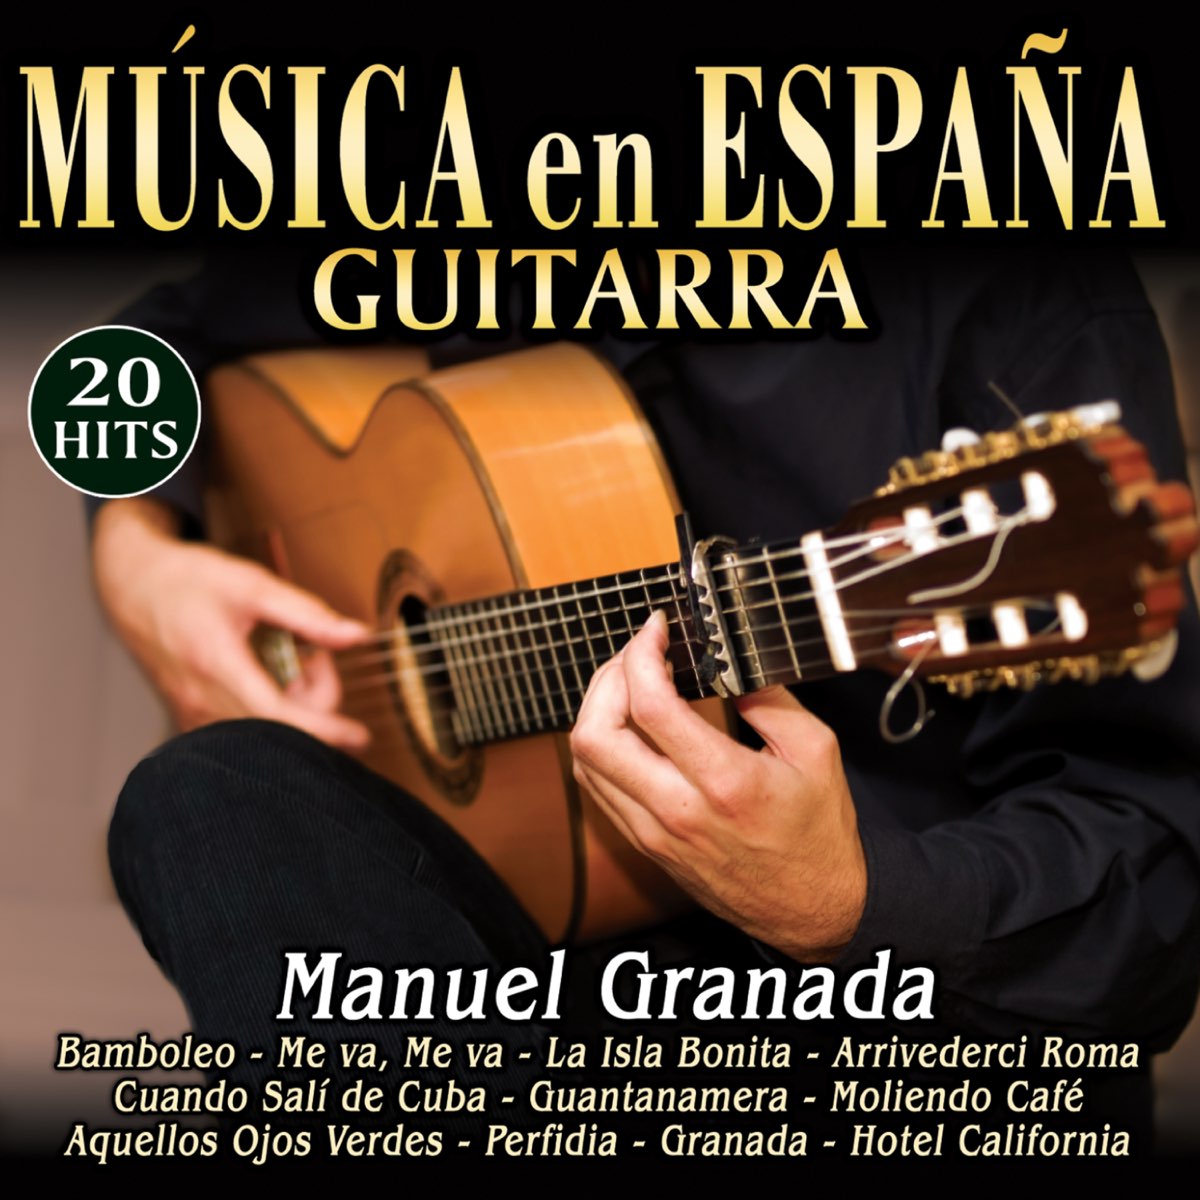 Guitarra. Música De España de Manuel Granada en Apple Music